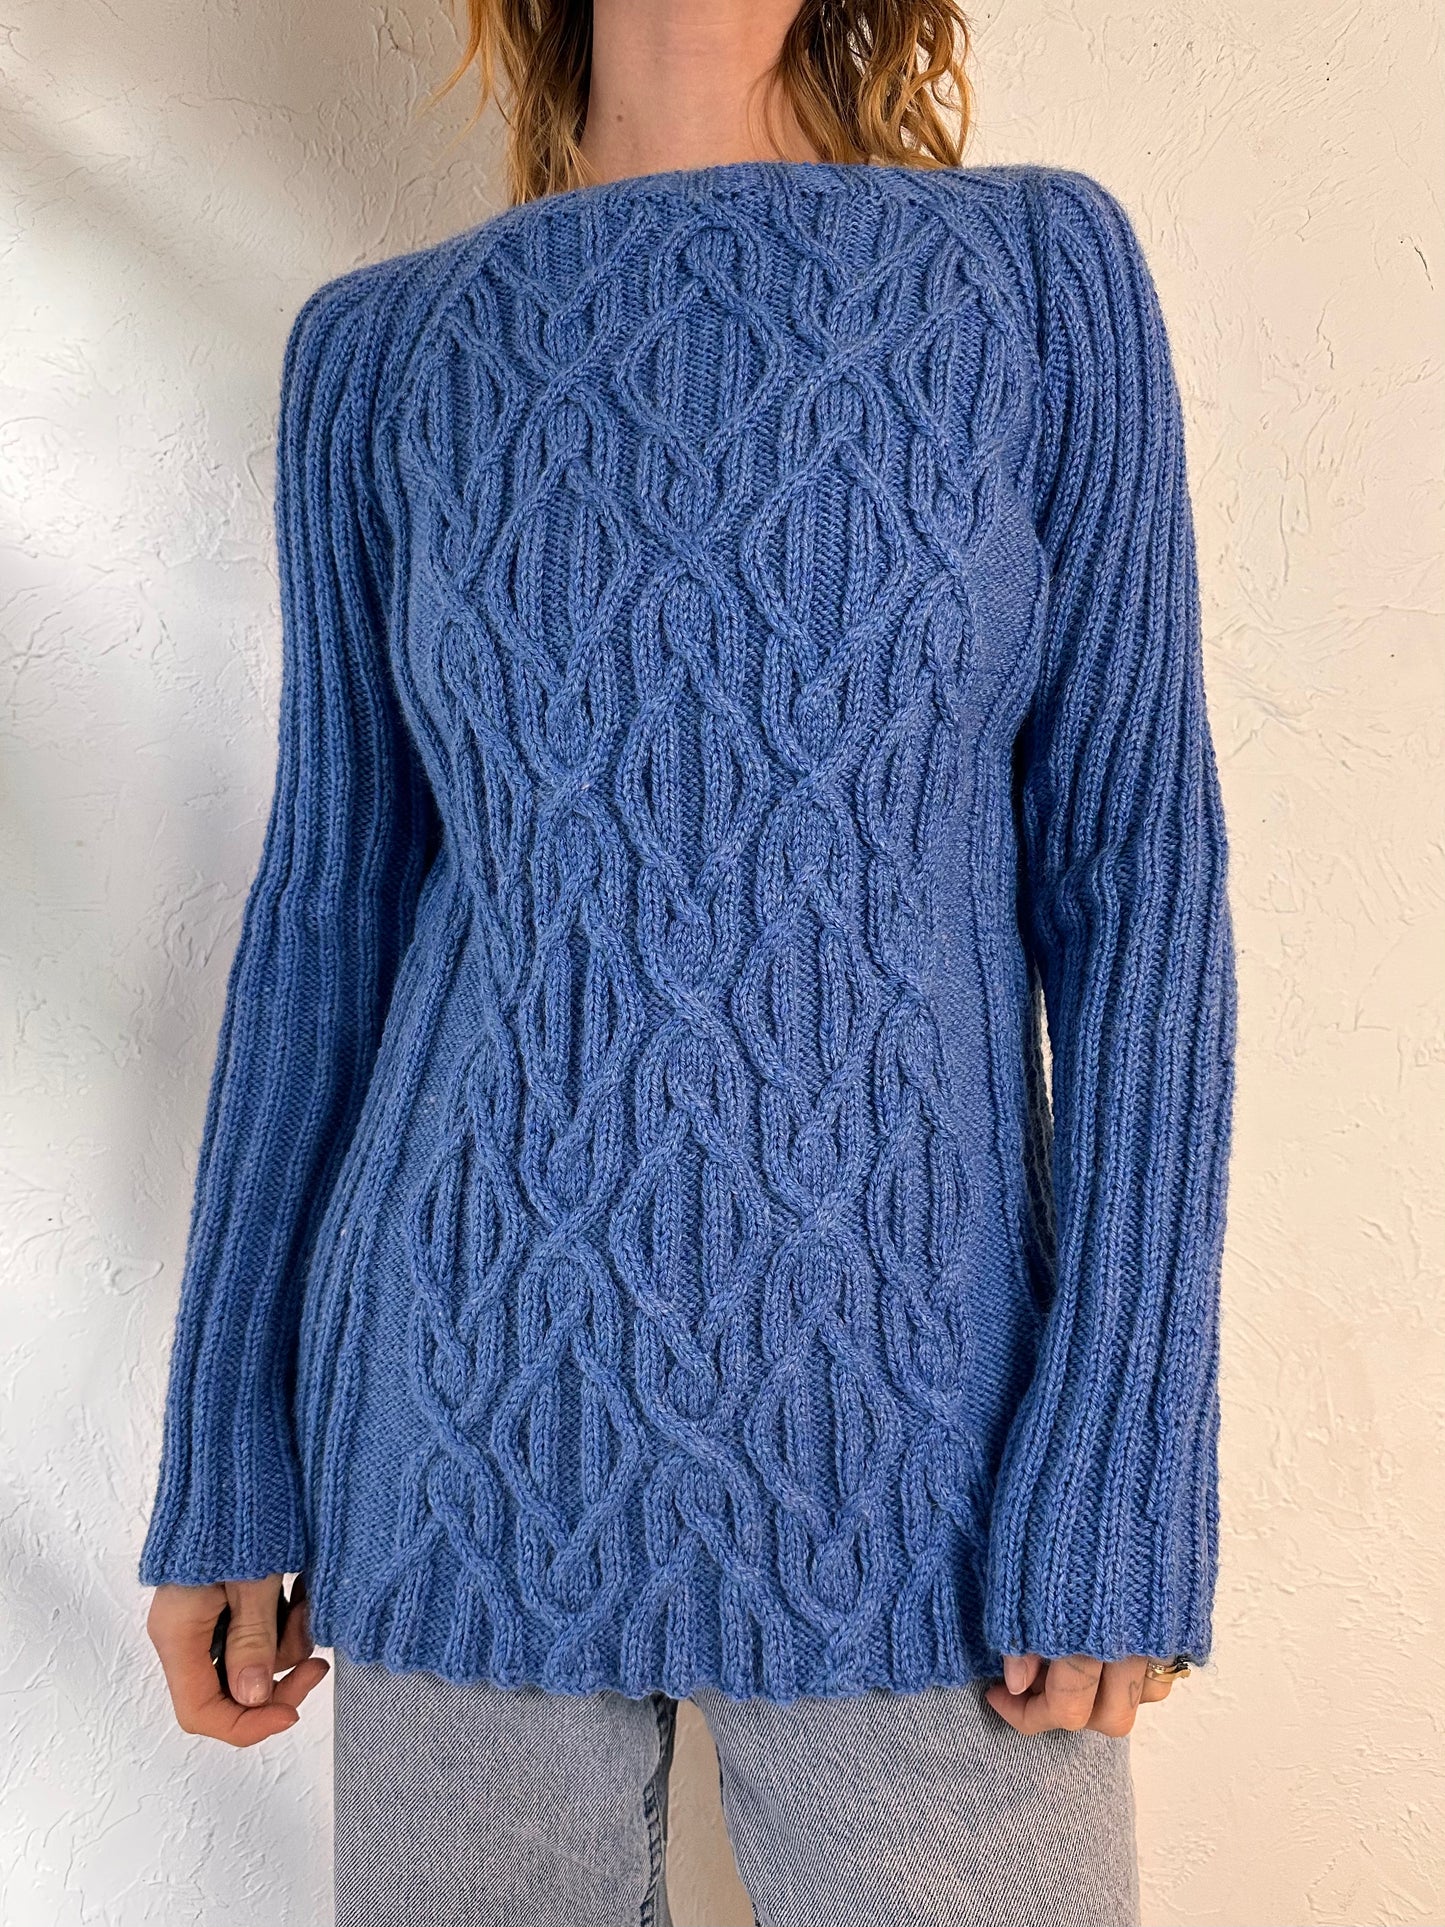 Vintage Blue Hand Knit Sweater / Medium